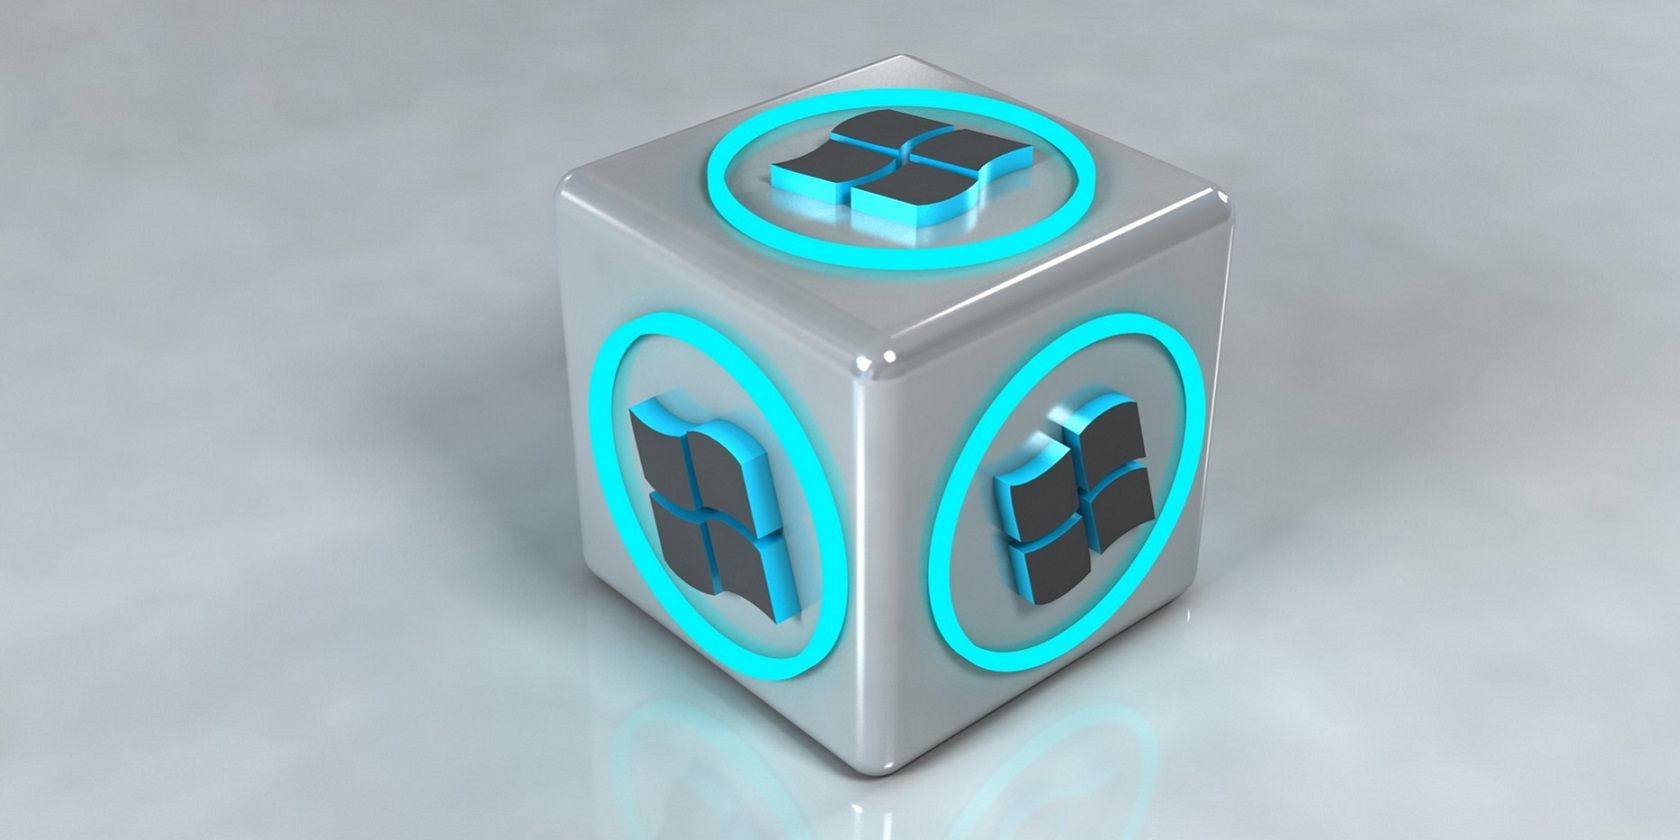 A 3D Windows cube